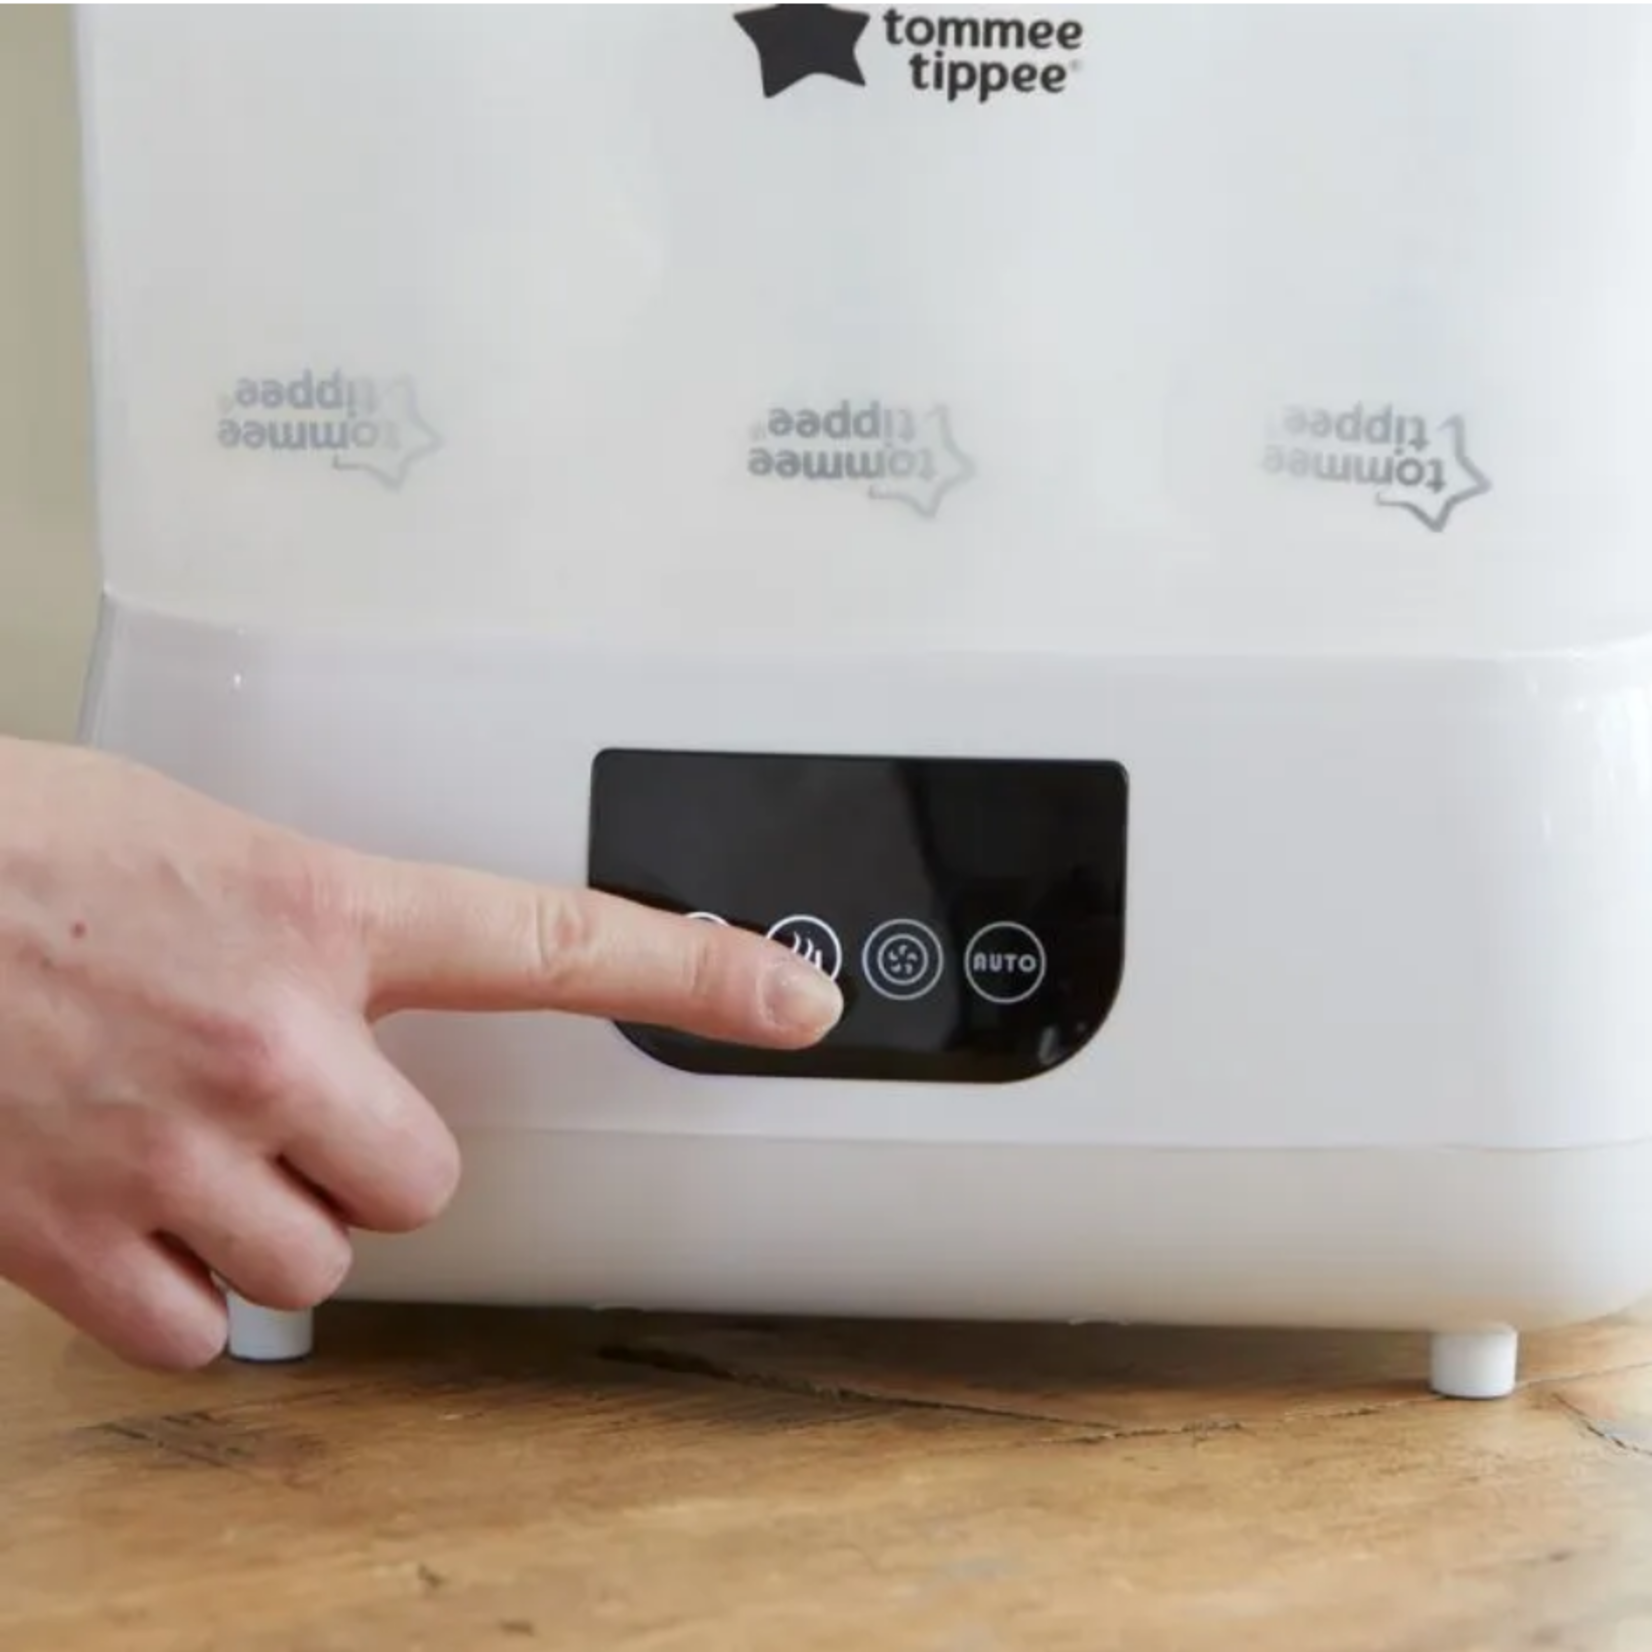 Tommee Tippee Advanced Steri-Dryer Electric Steriliser-White